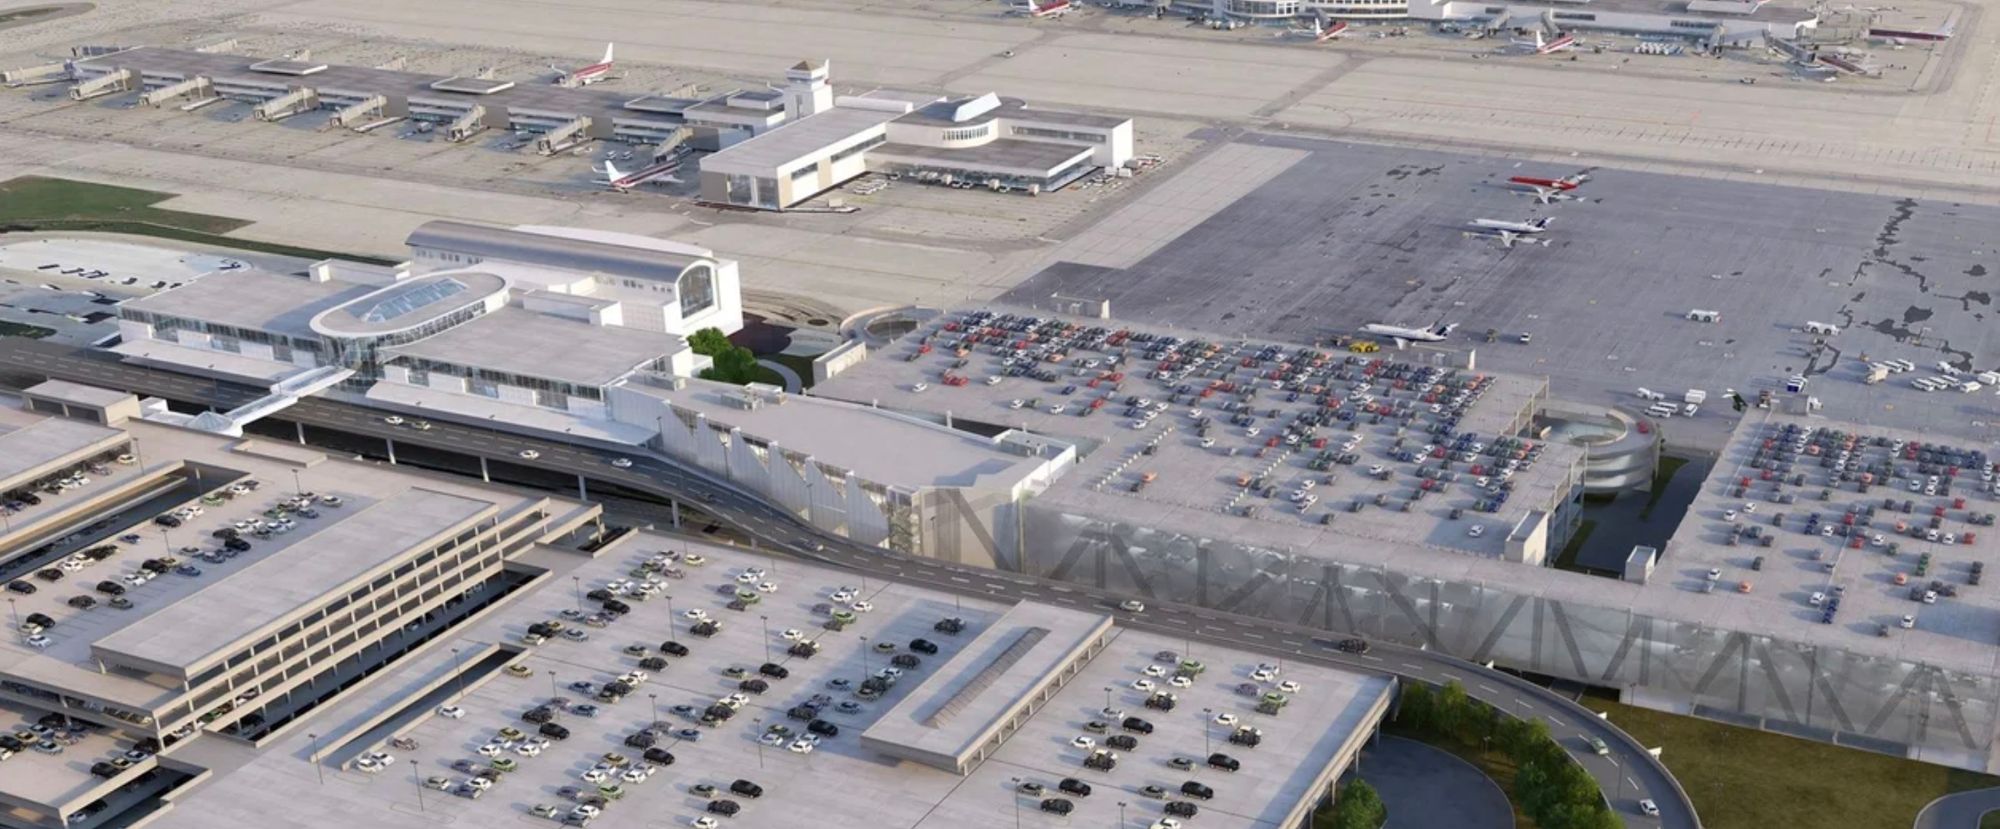 Cincinnati/Northern Kentucky International Airport (CVG)